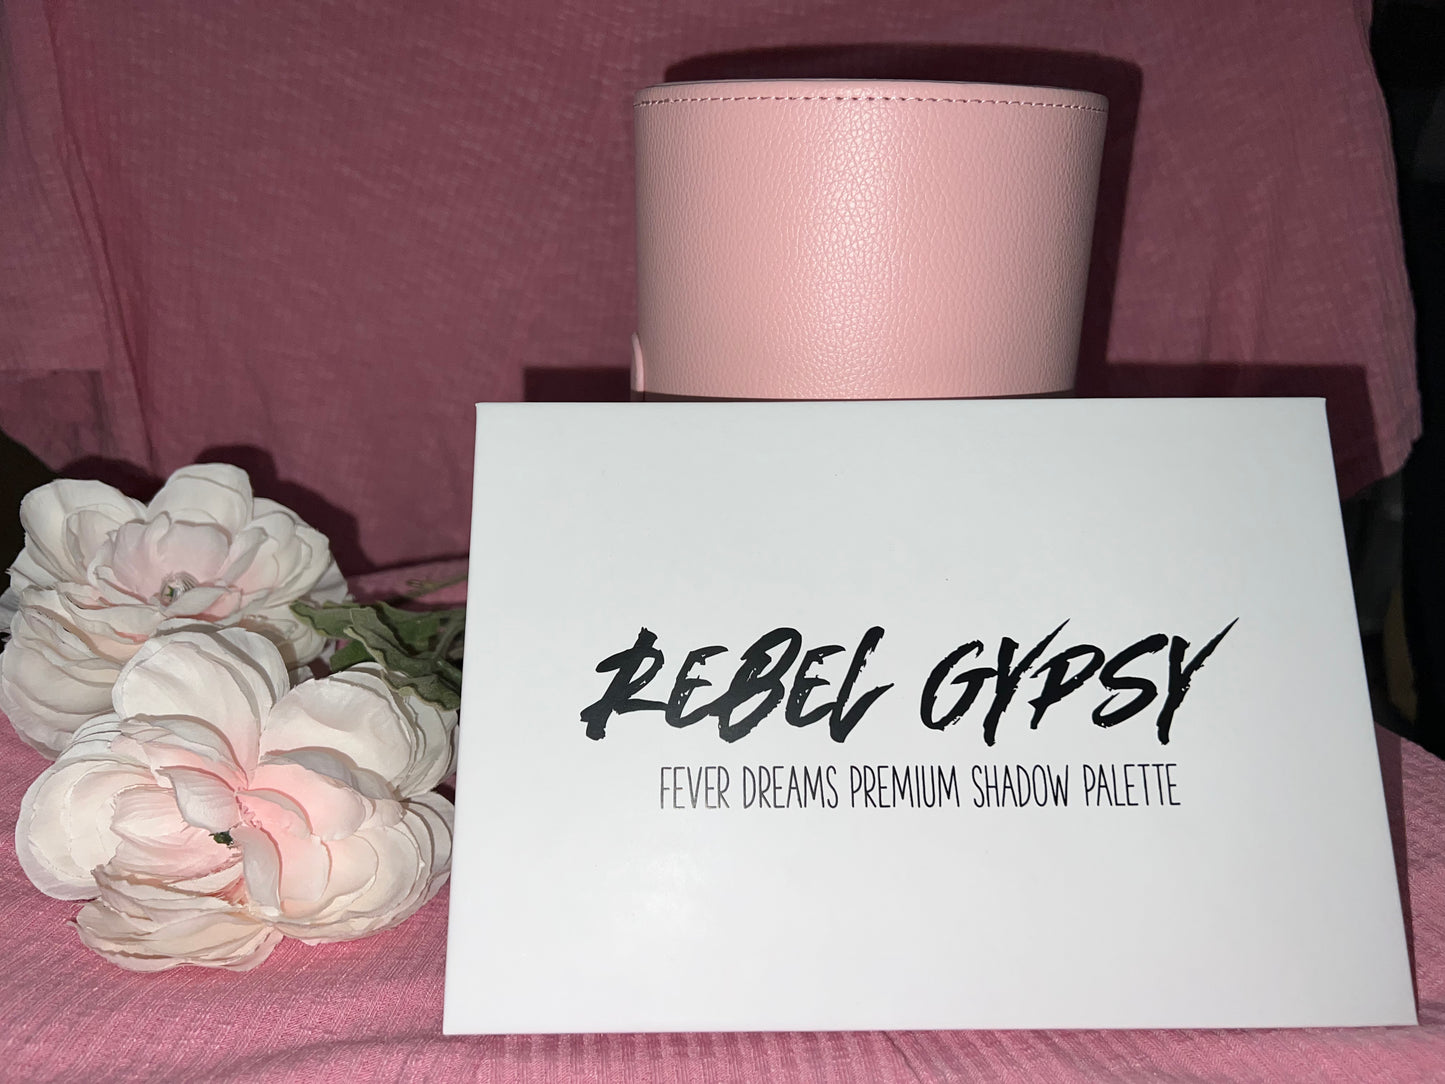 Rebel Gypsy Fever Dreams Premium Shadow Palette